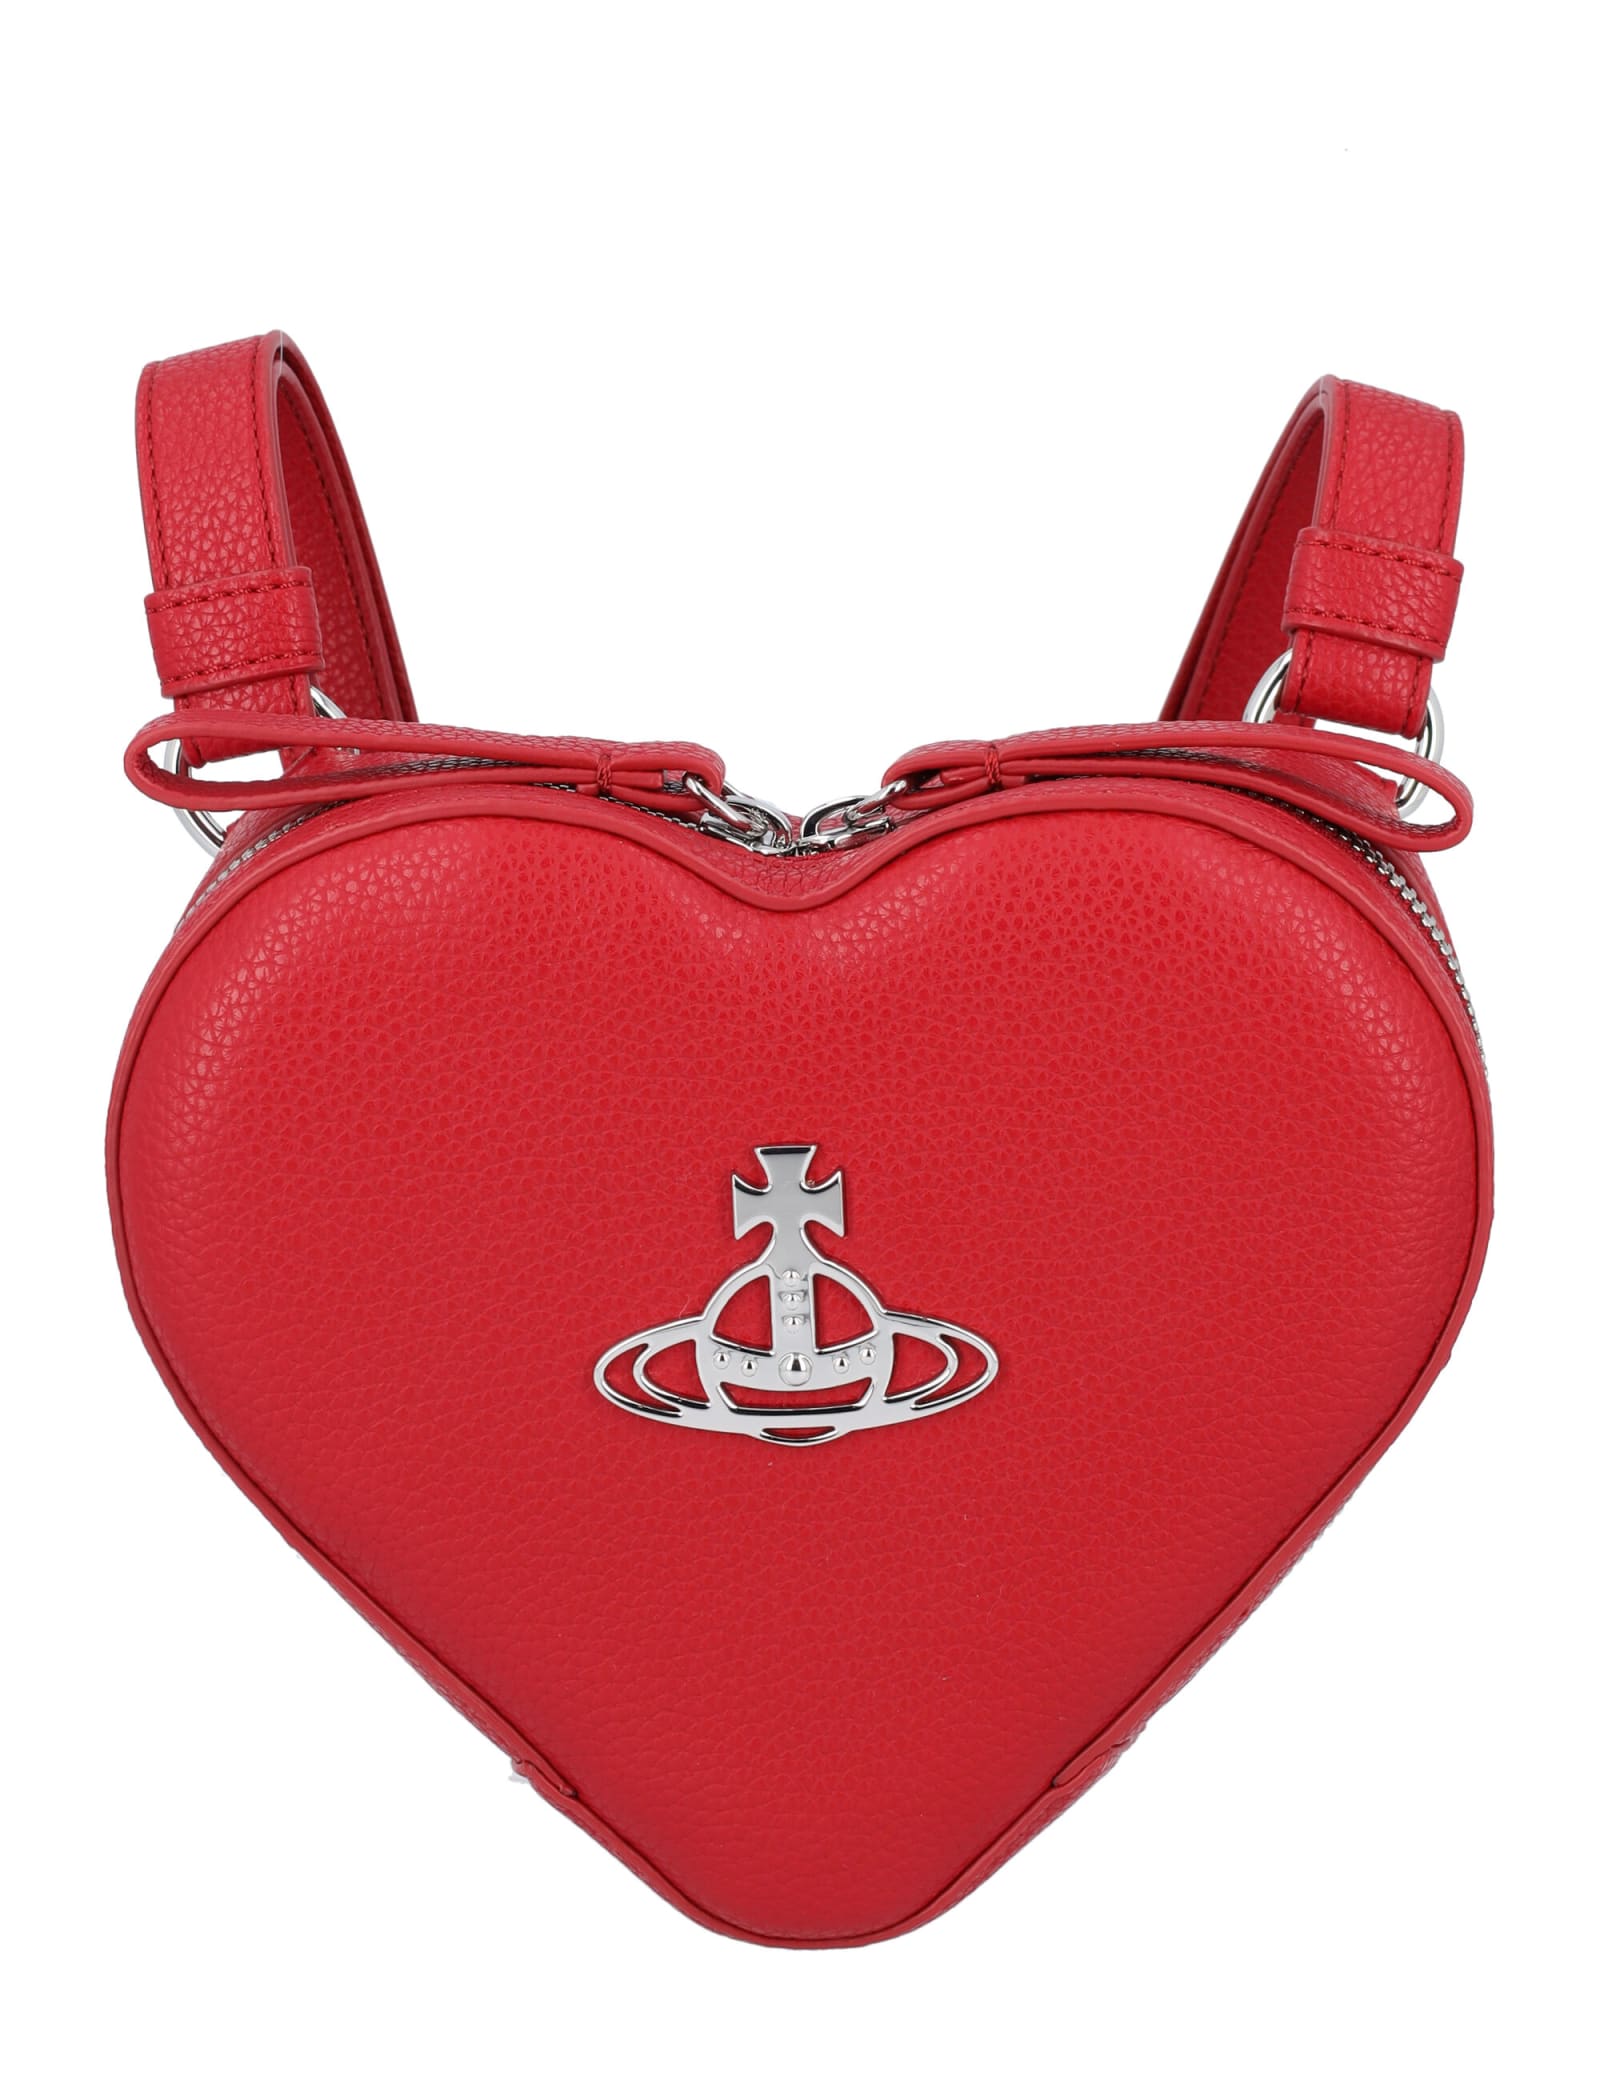 Cross body bags Vivienne Westwood - Johanna Heart crossbody bag in red -  4303001801229H401